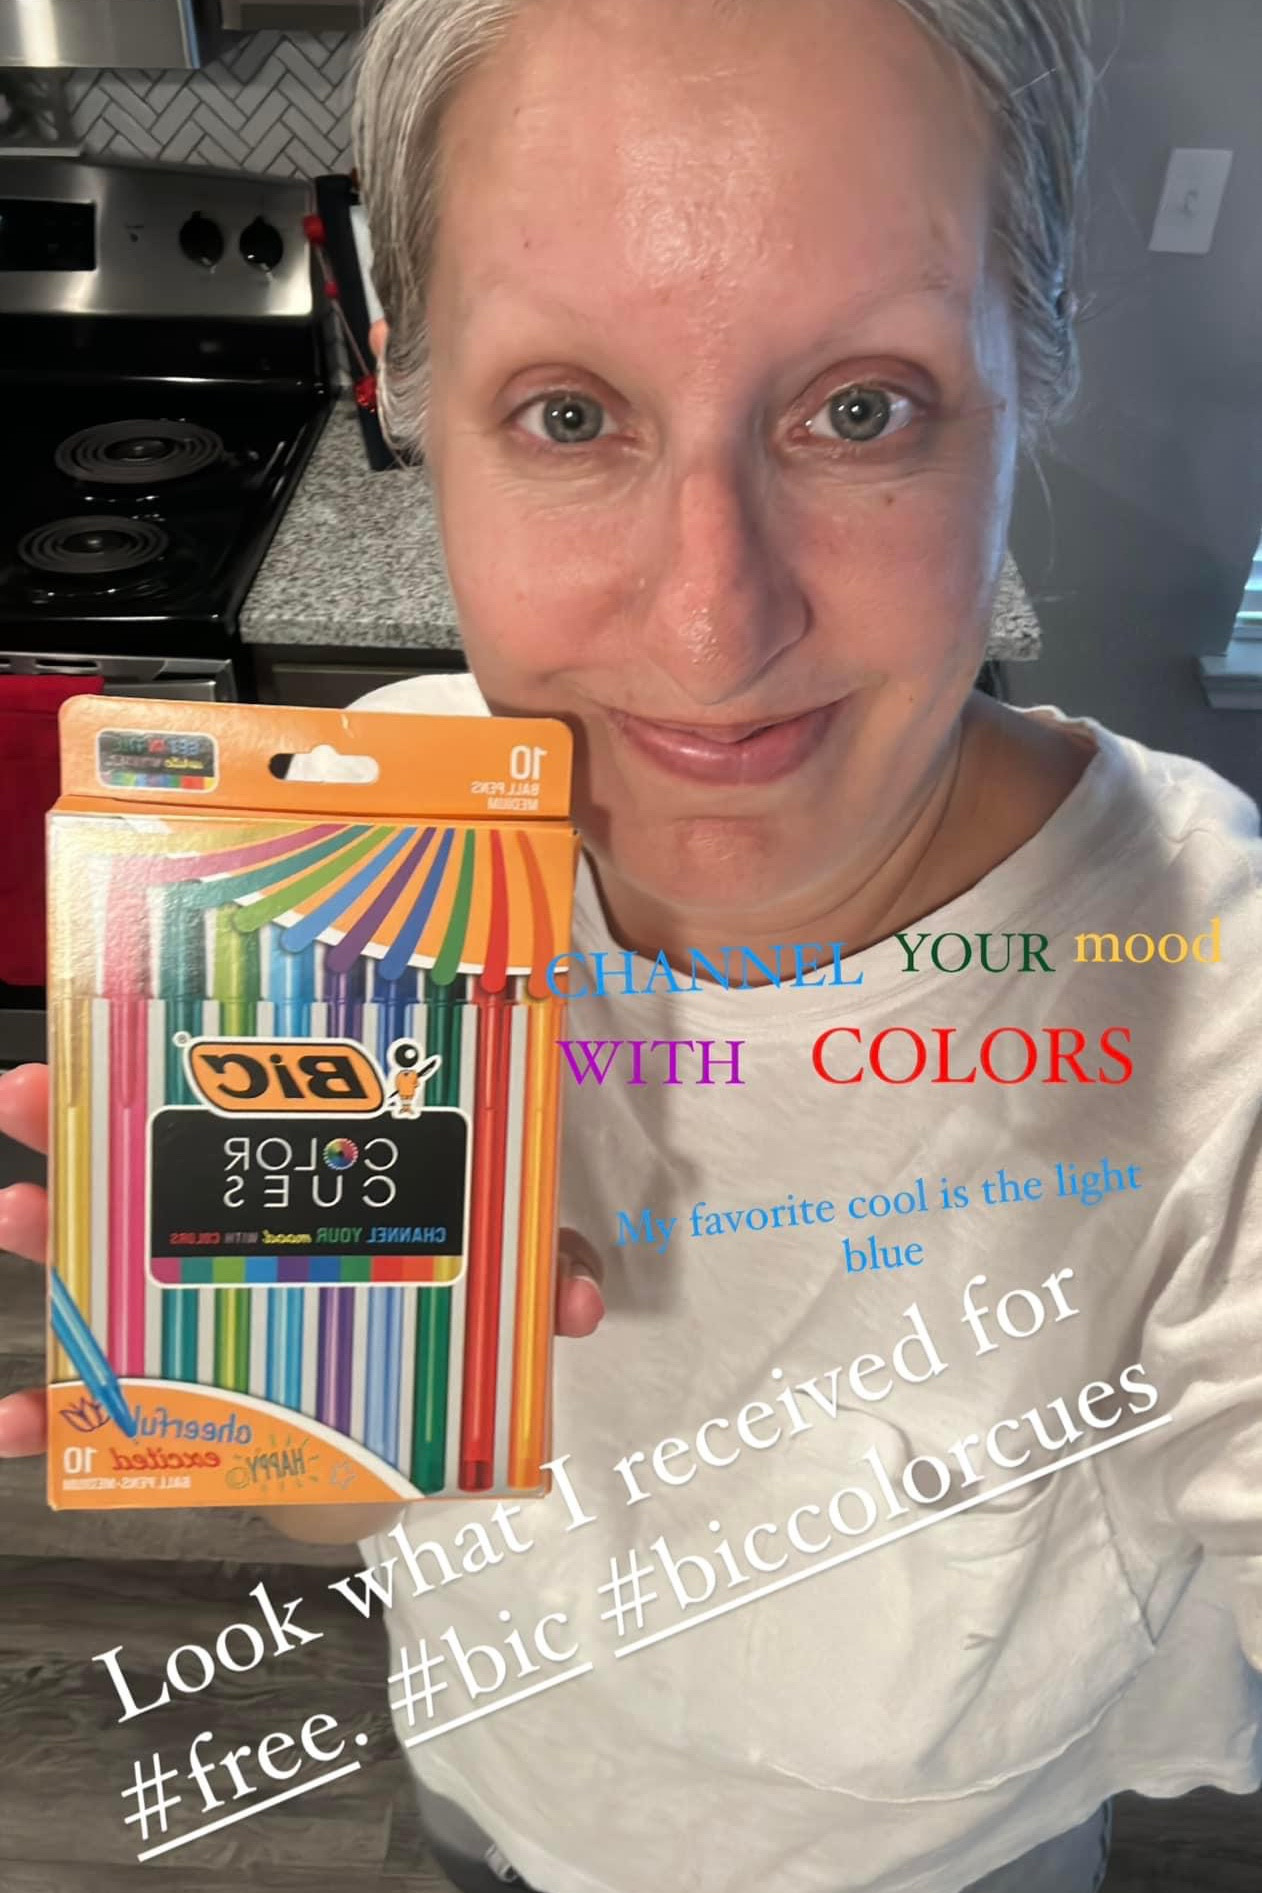 BIC Color Cues Mechanical Pencil Set, 60-Count Pack